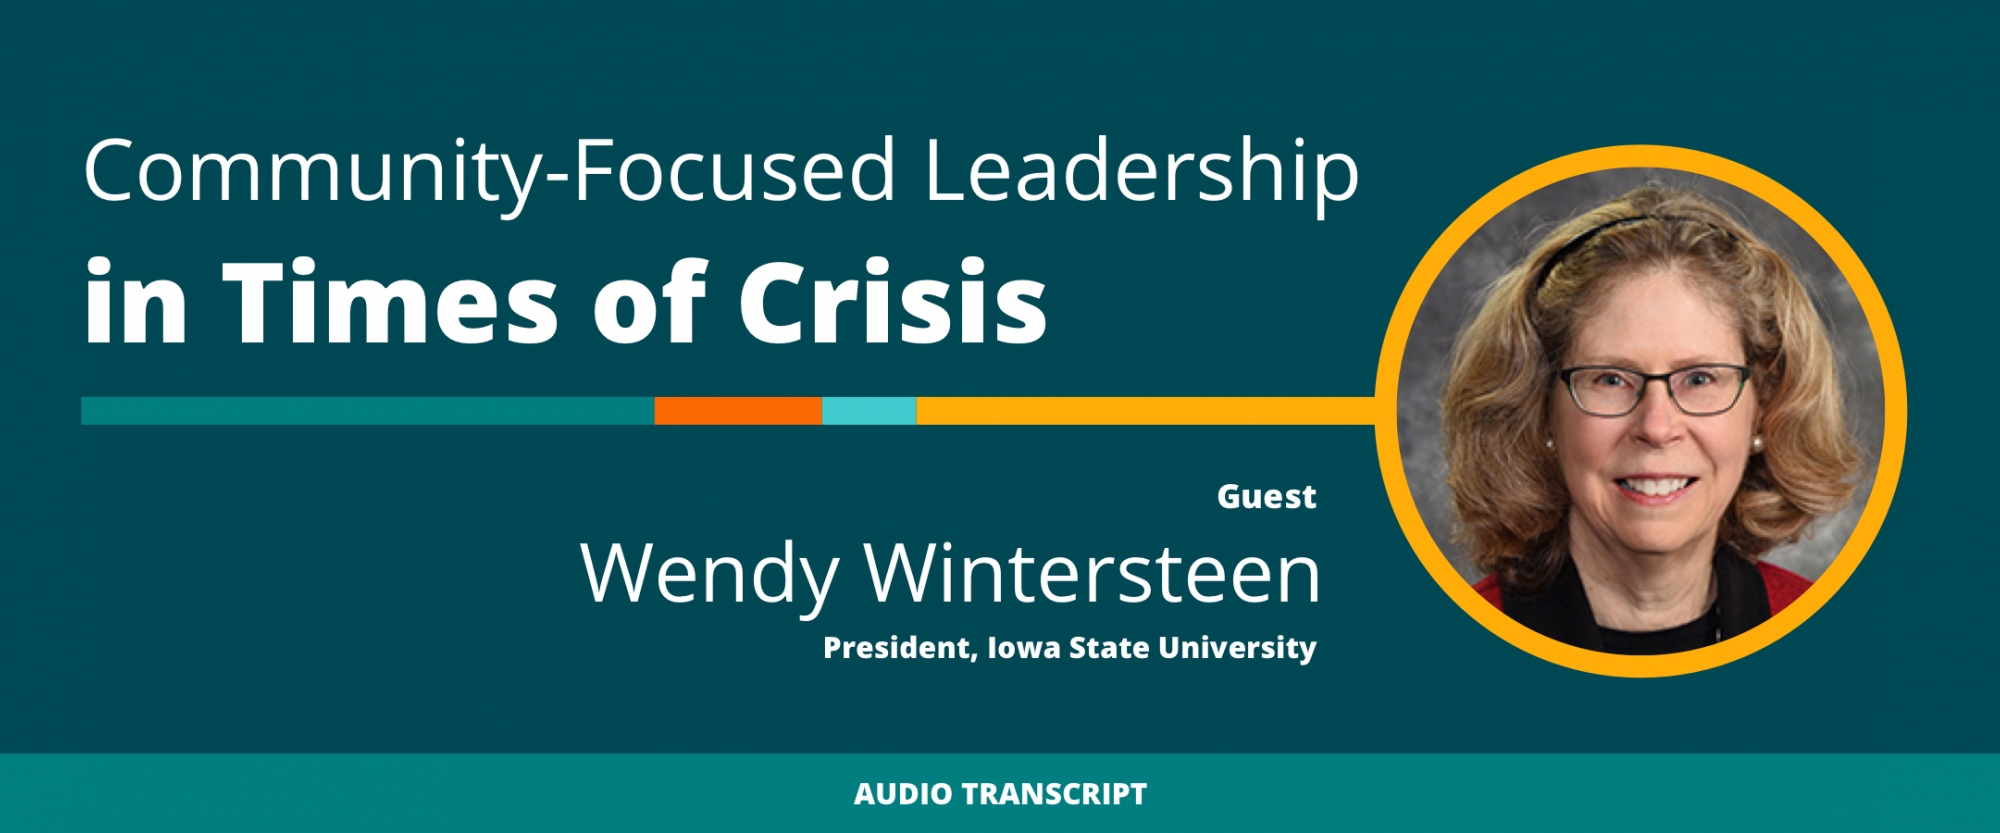 Weekly Wisdom Episode 3: Transcript of Conversation With Wendy Wintersteen, Iowa State University President